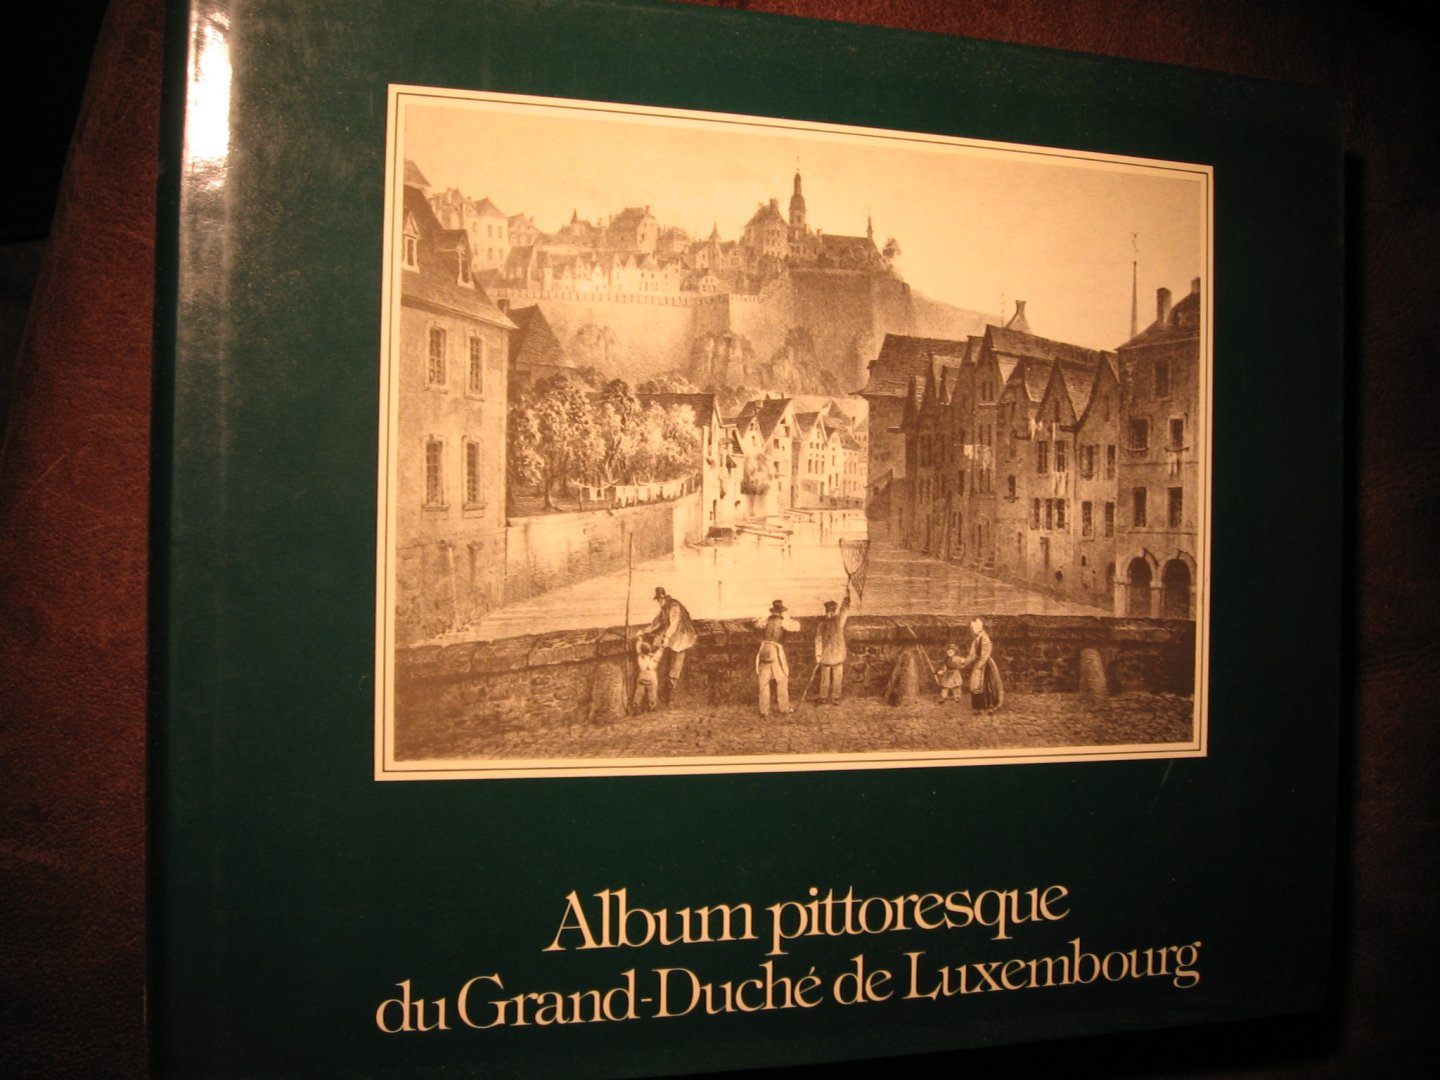  - Album pittoresque du Grand-Duche de Luxembourg.